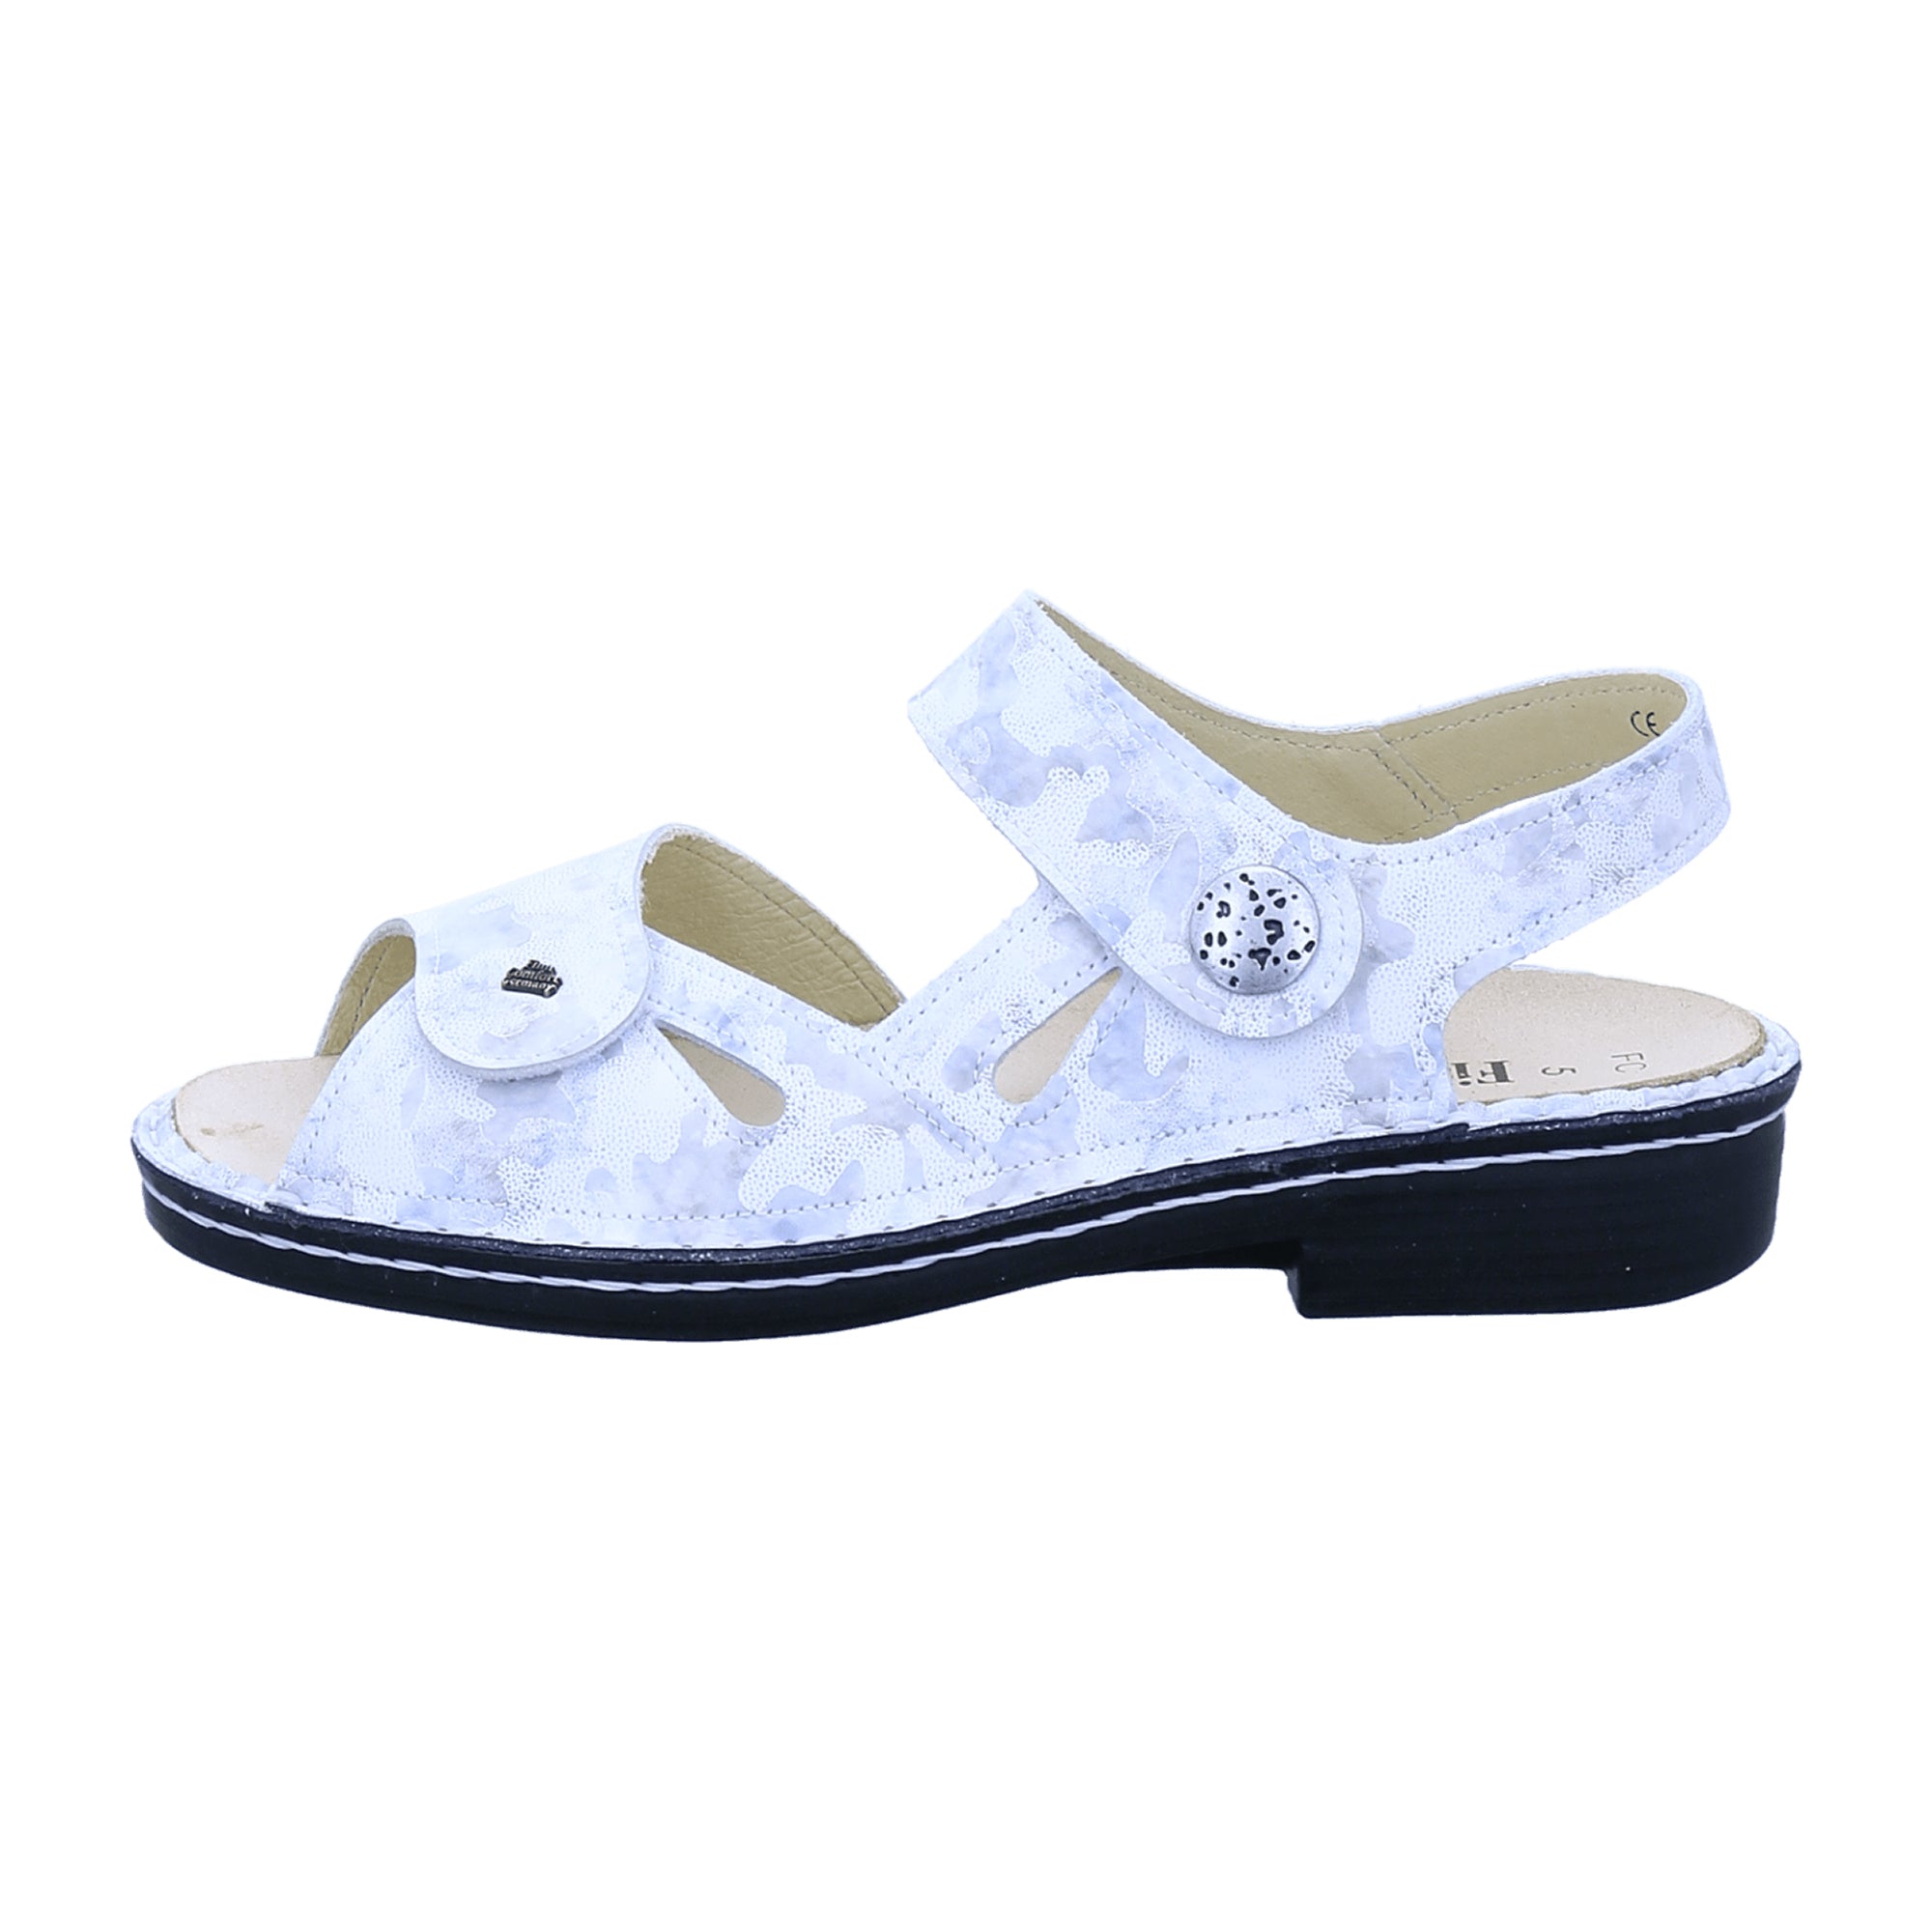 Finn Comfort Costa Women's Comfortable White Sandals - Stylish & Durable